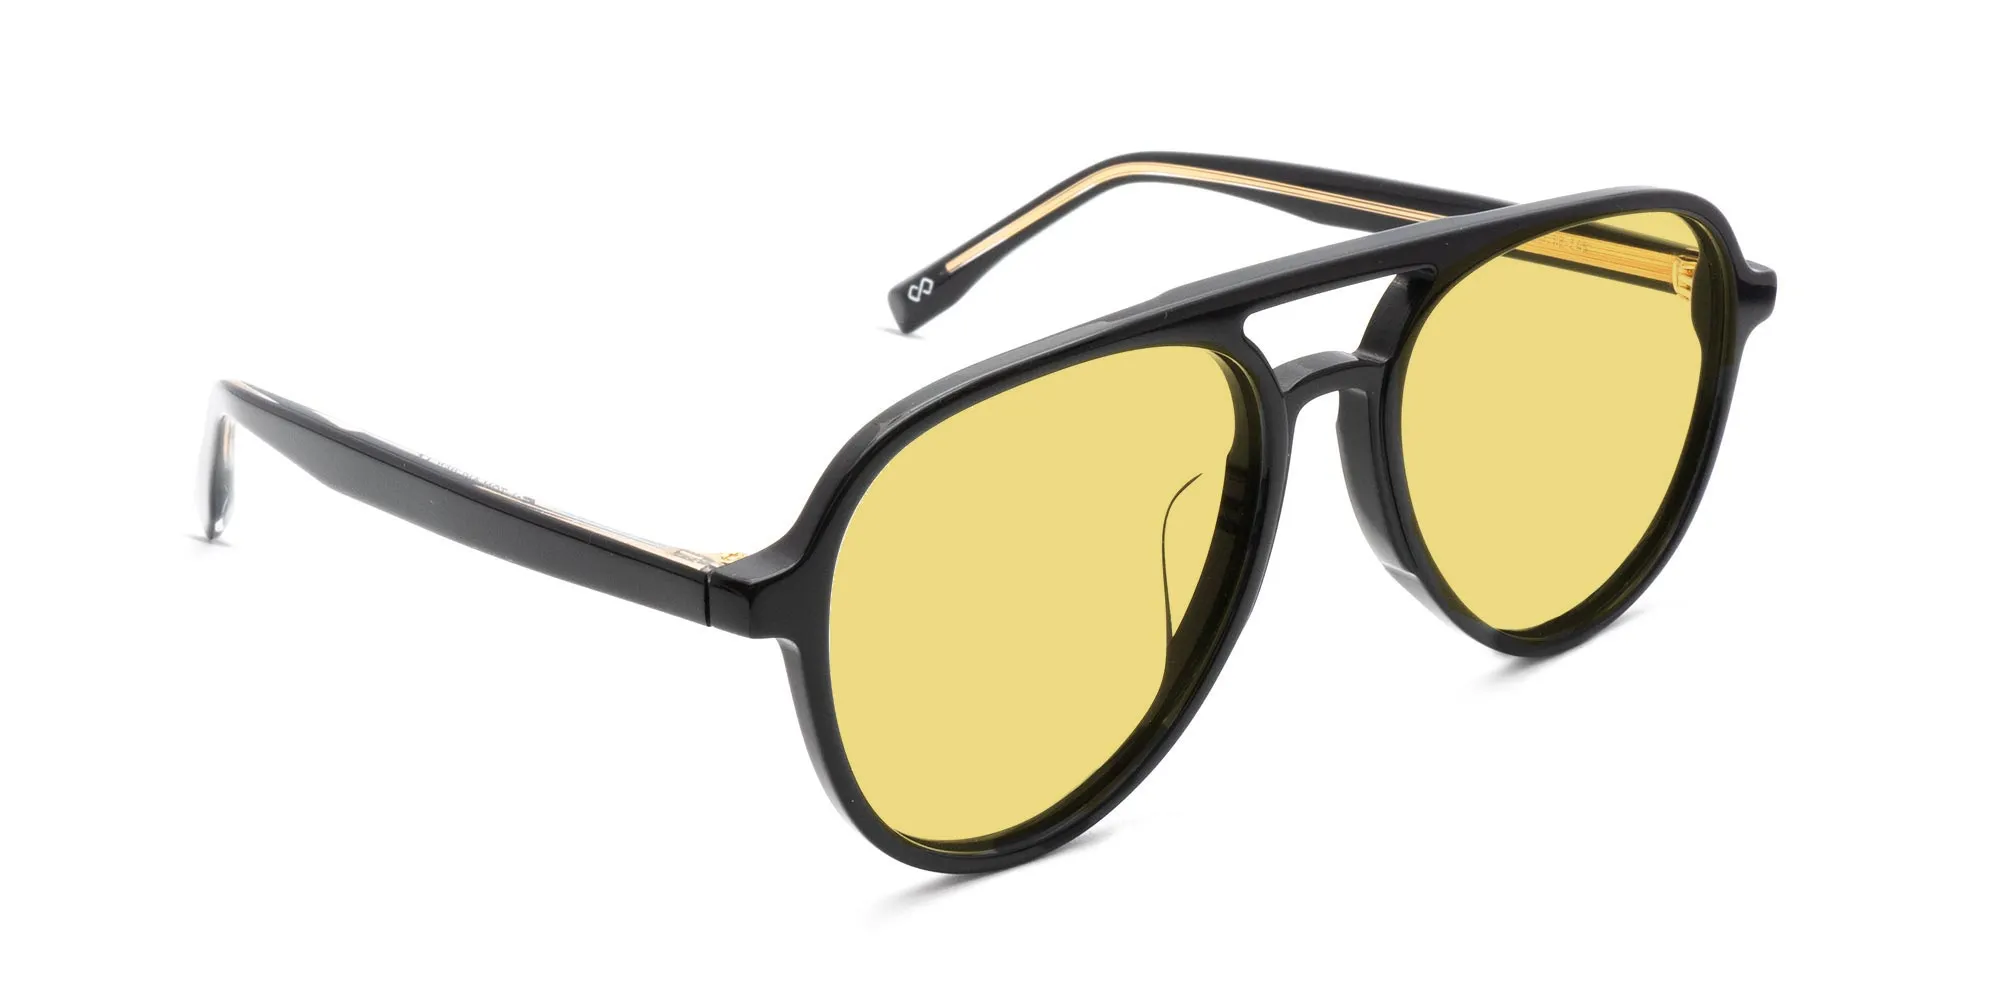 Pilot Sunglasses With Yellow Tint-2